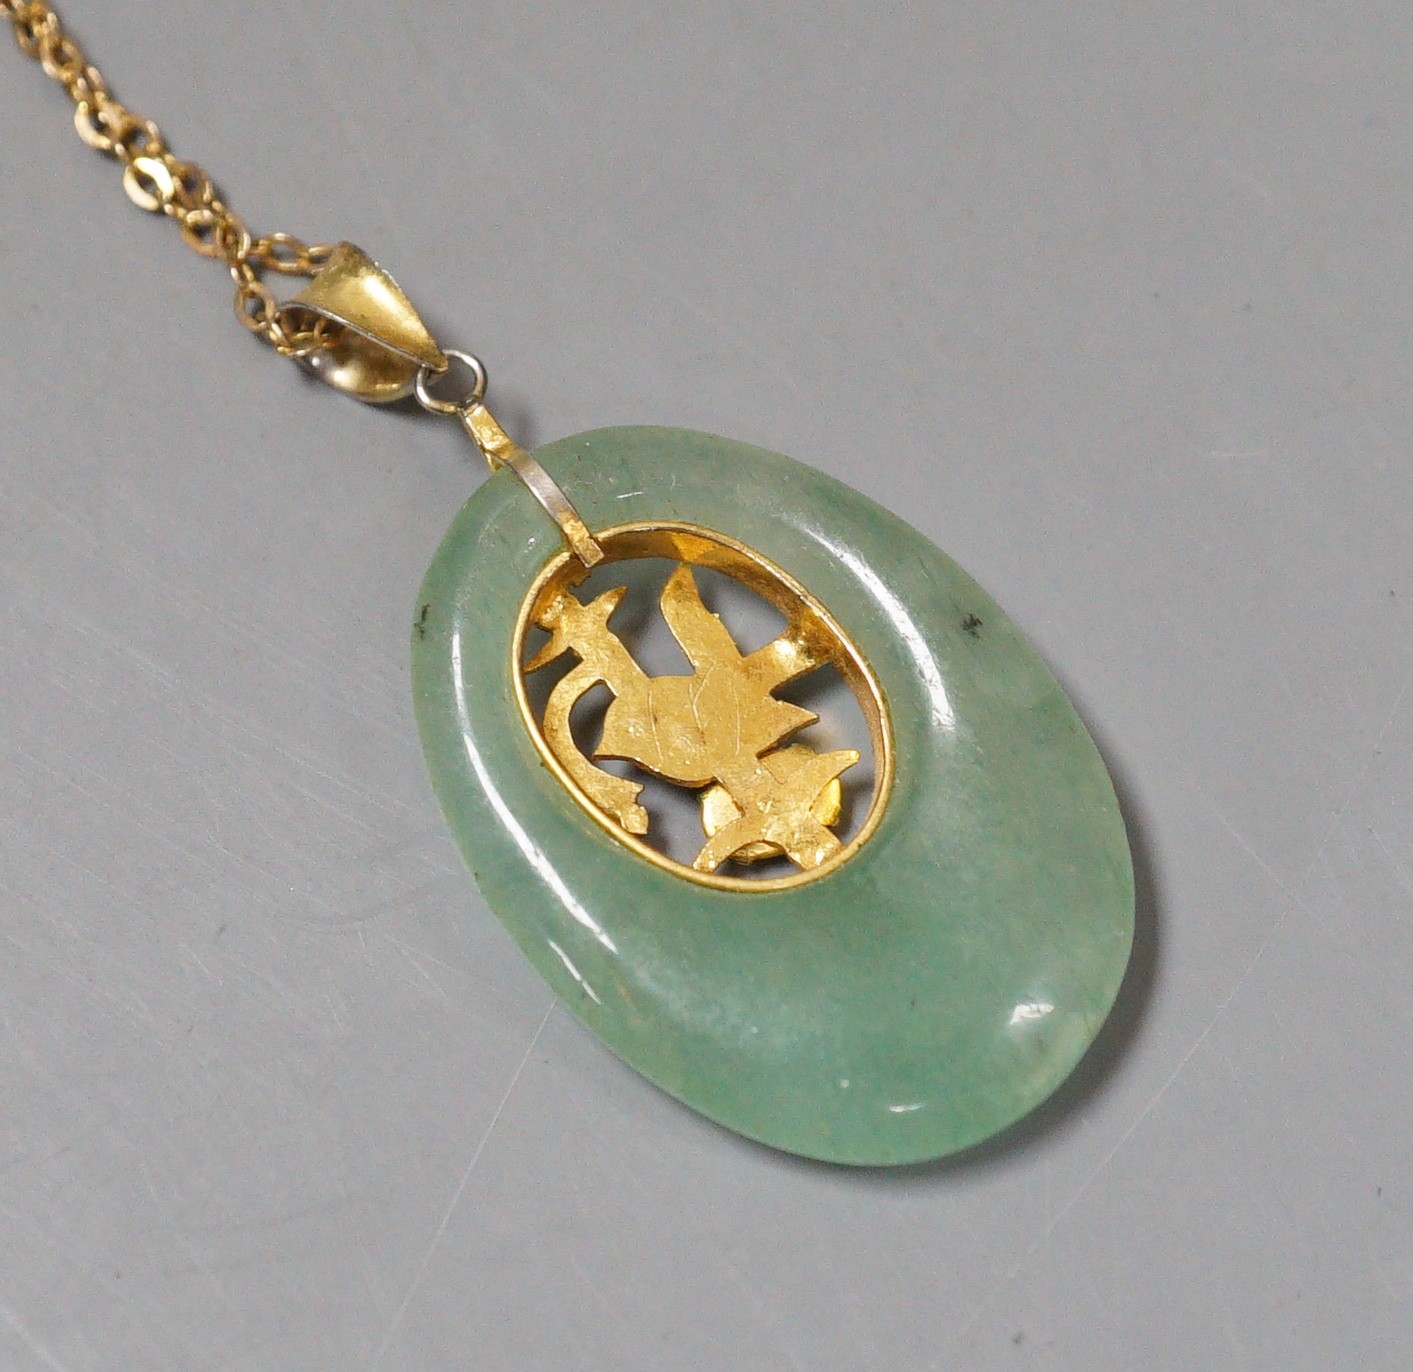 A gilt metal and gem set mounted oval adventurine quartz? pendant, 36mm, on a 9ct chain, 46cm, gross weight 9.4 grams.